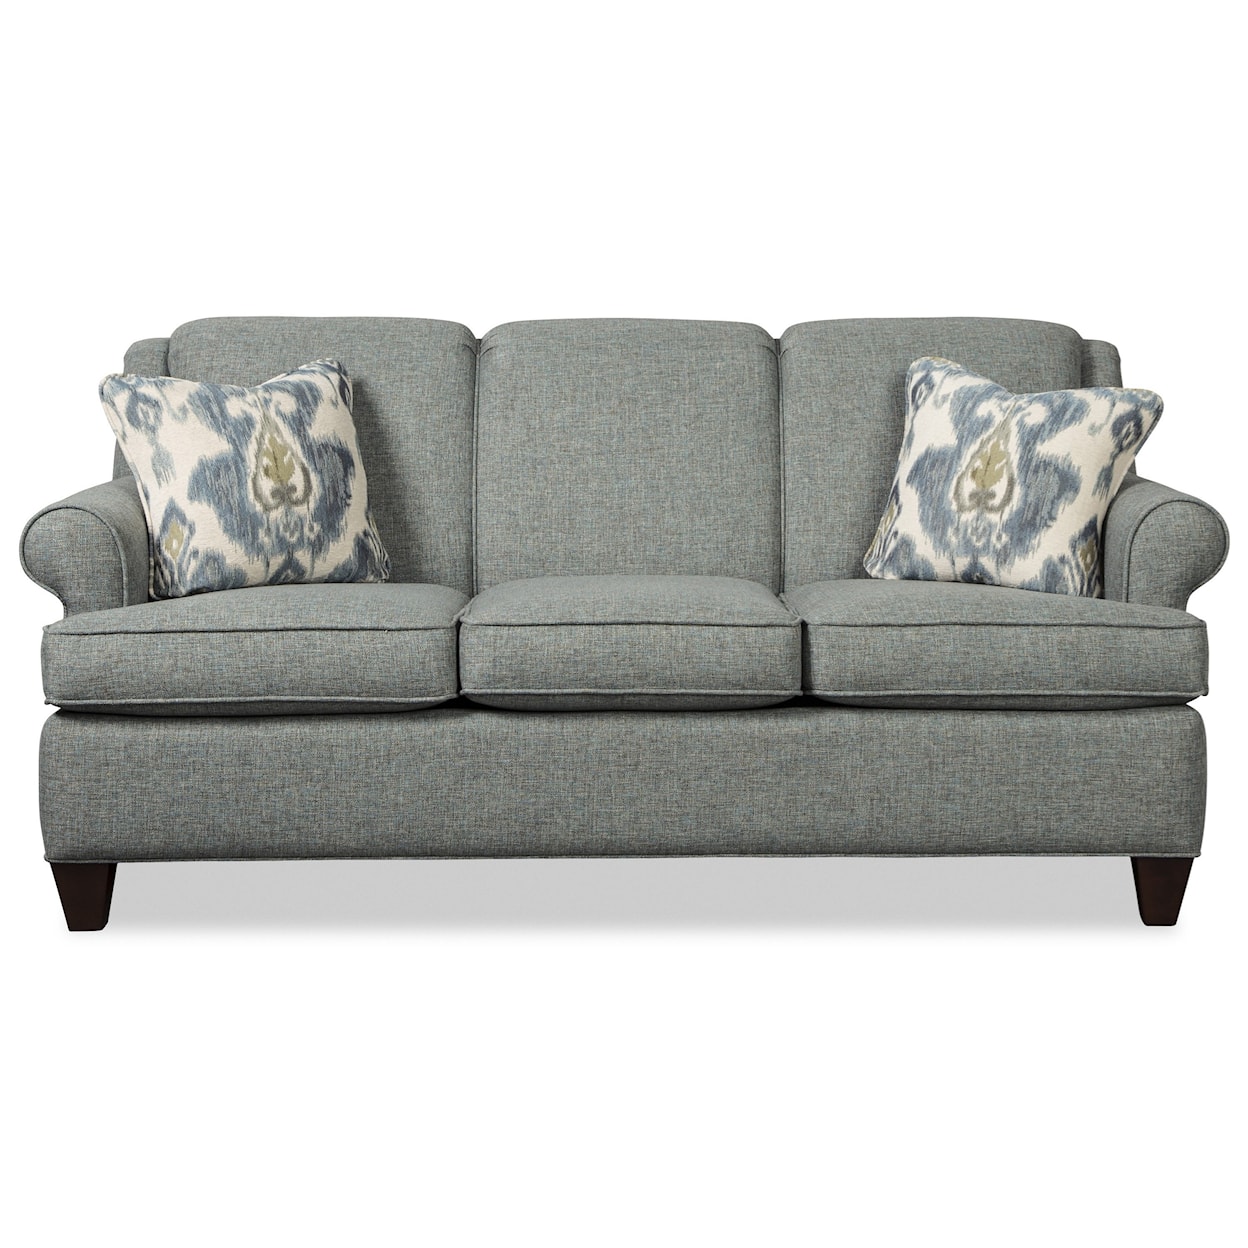 Hickory Craft 781850 Full Size Sleeper Sofa